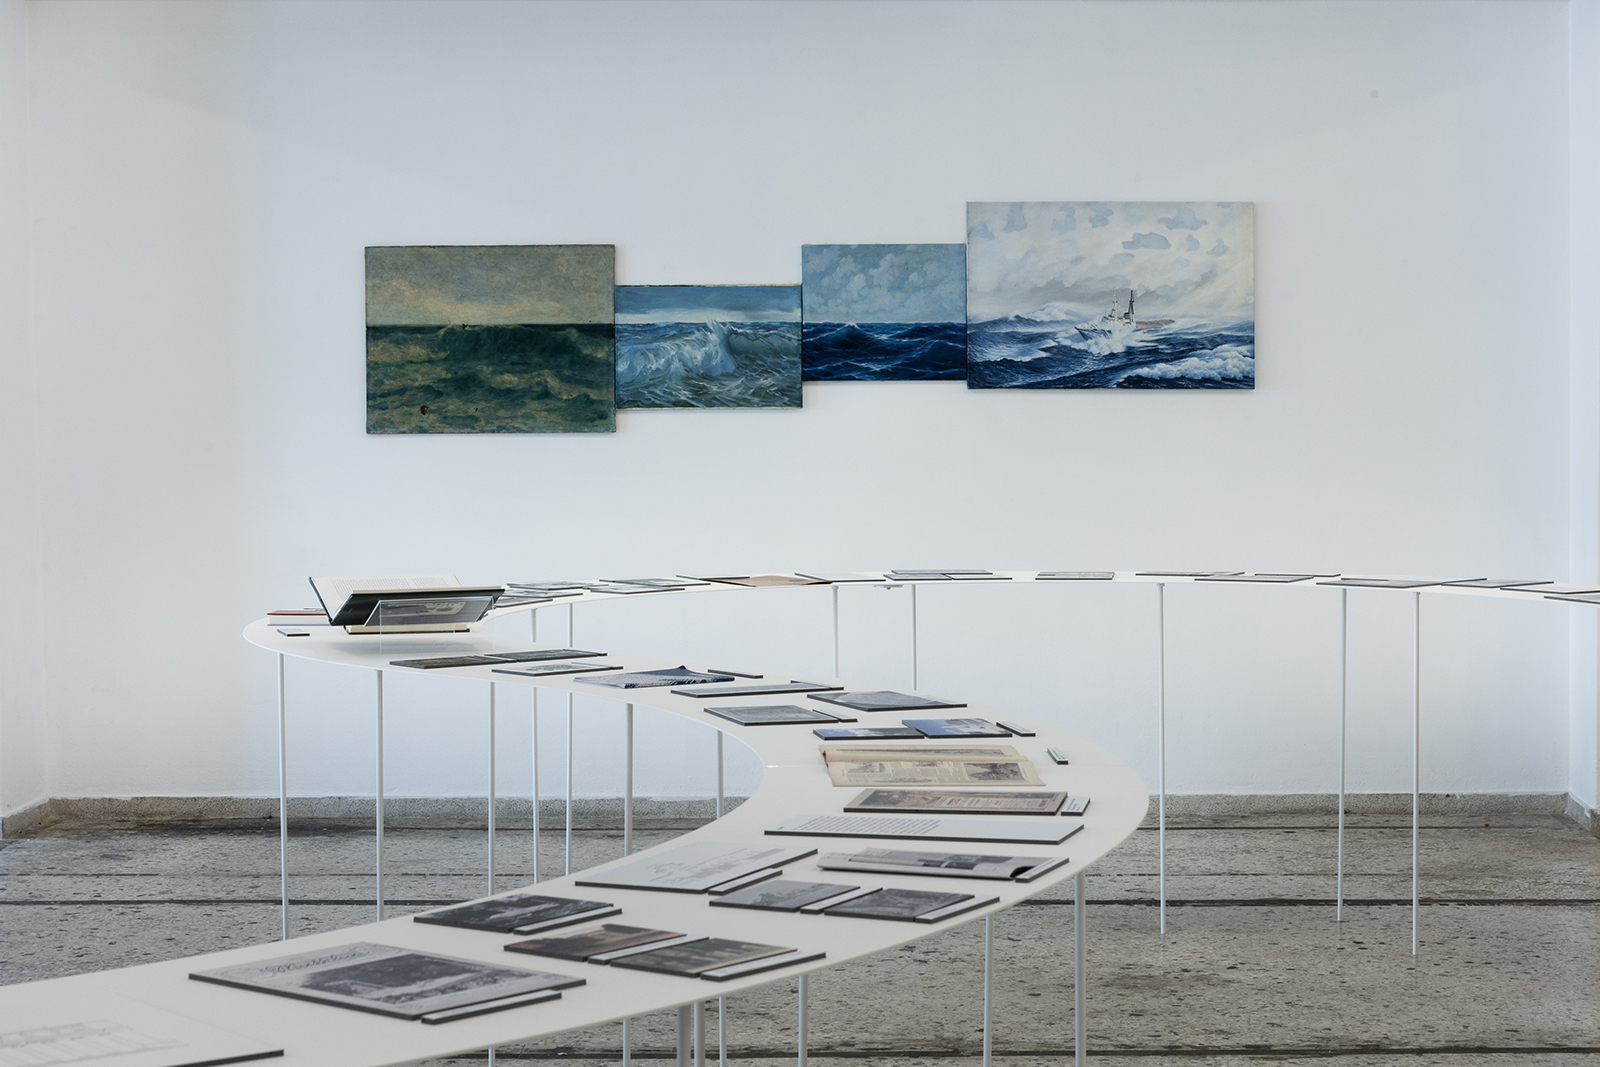 Archisearch Exhibition Design “The Sea Around Us” at TAVROS art space | Evita Fanou Architecture & Design